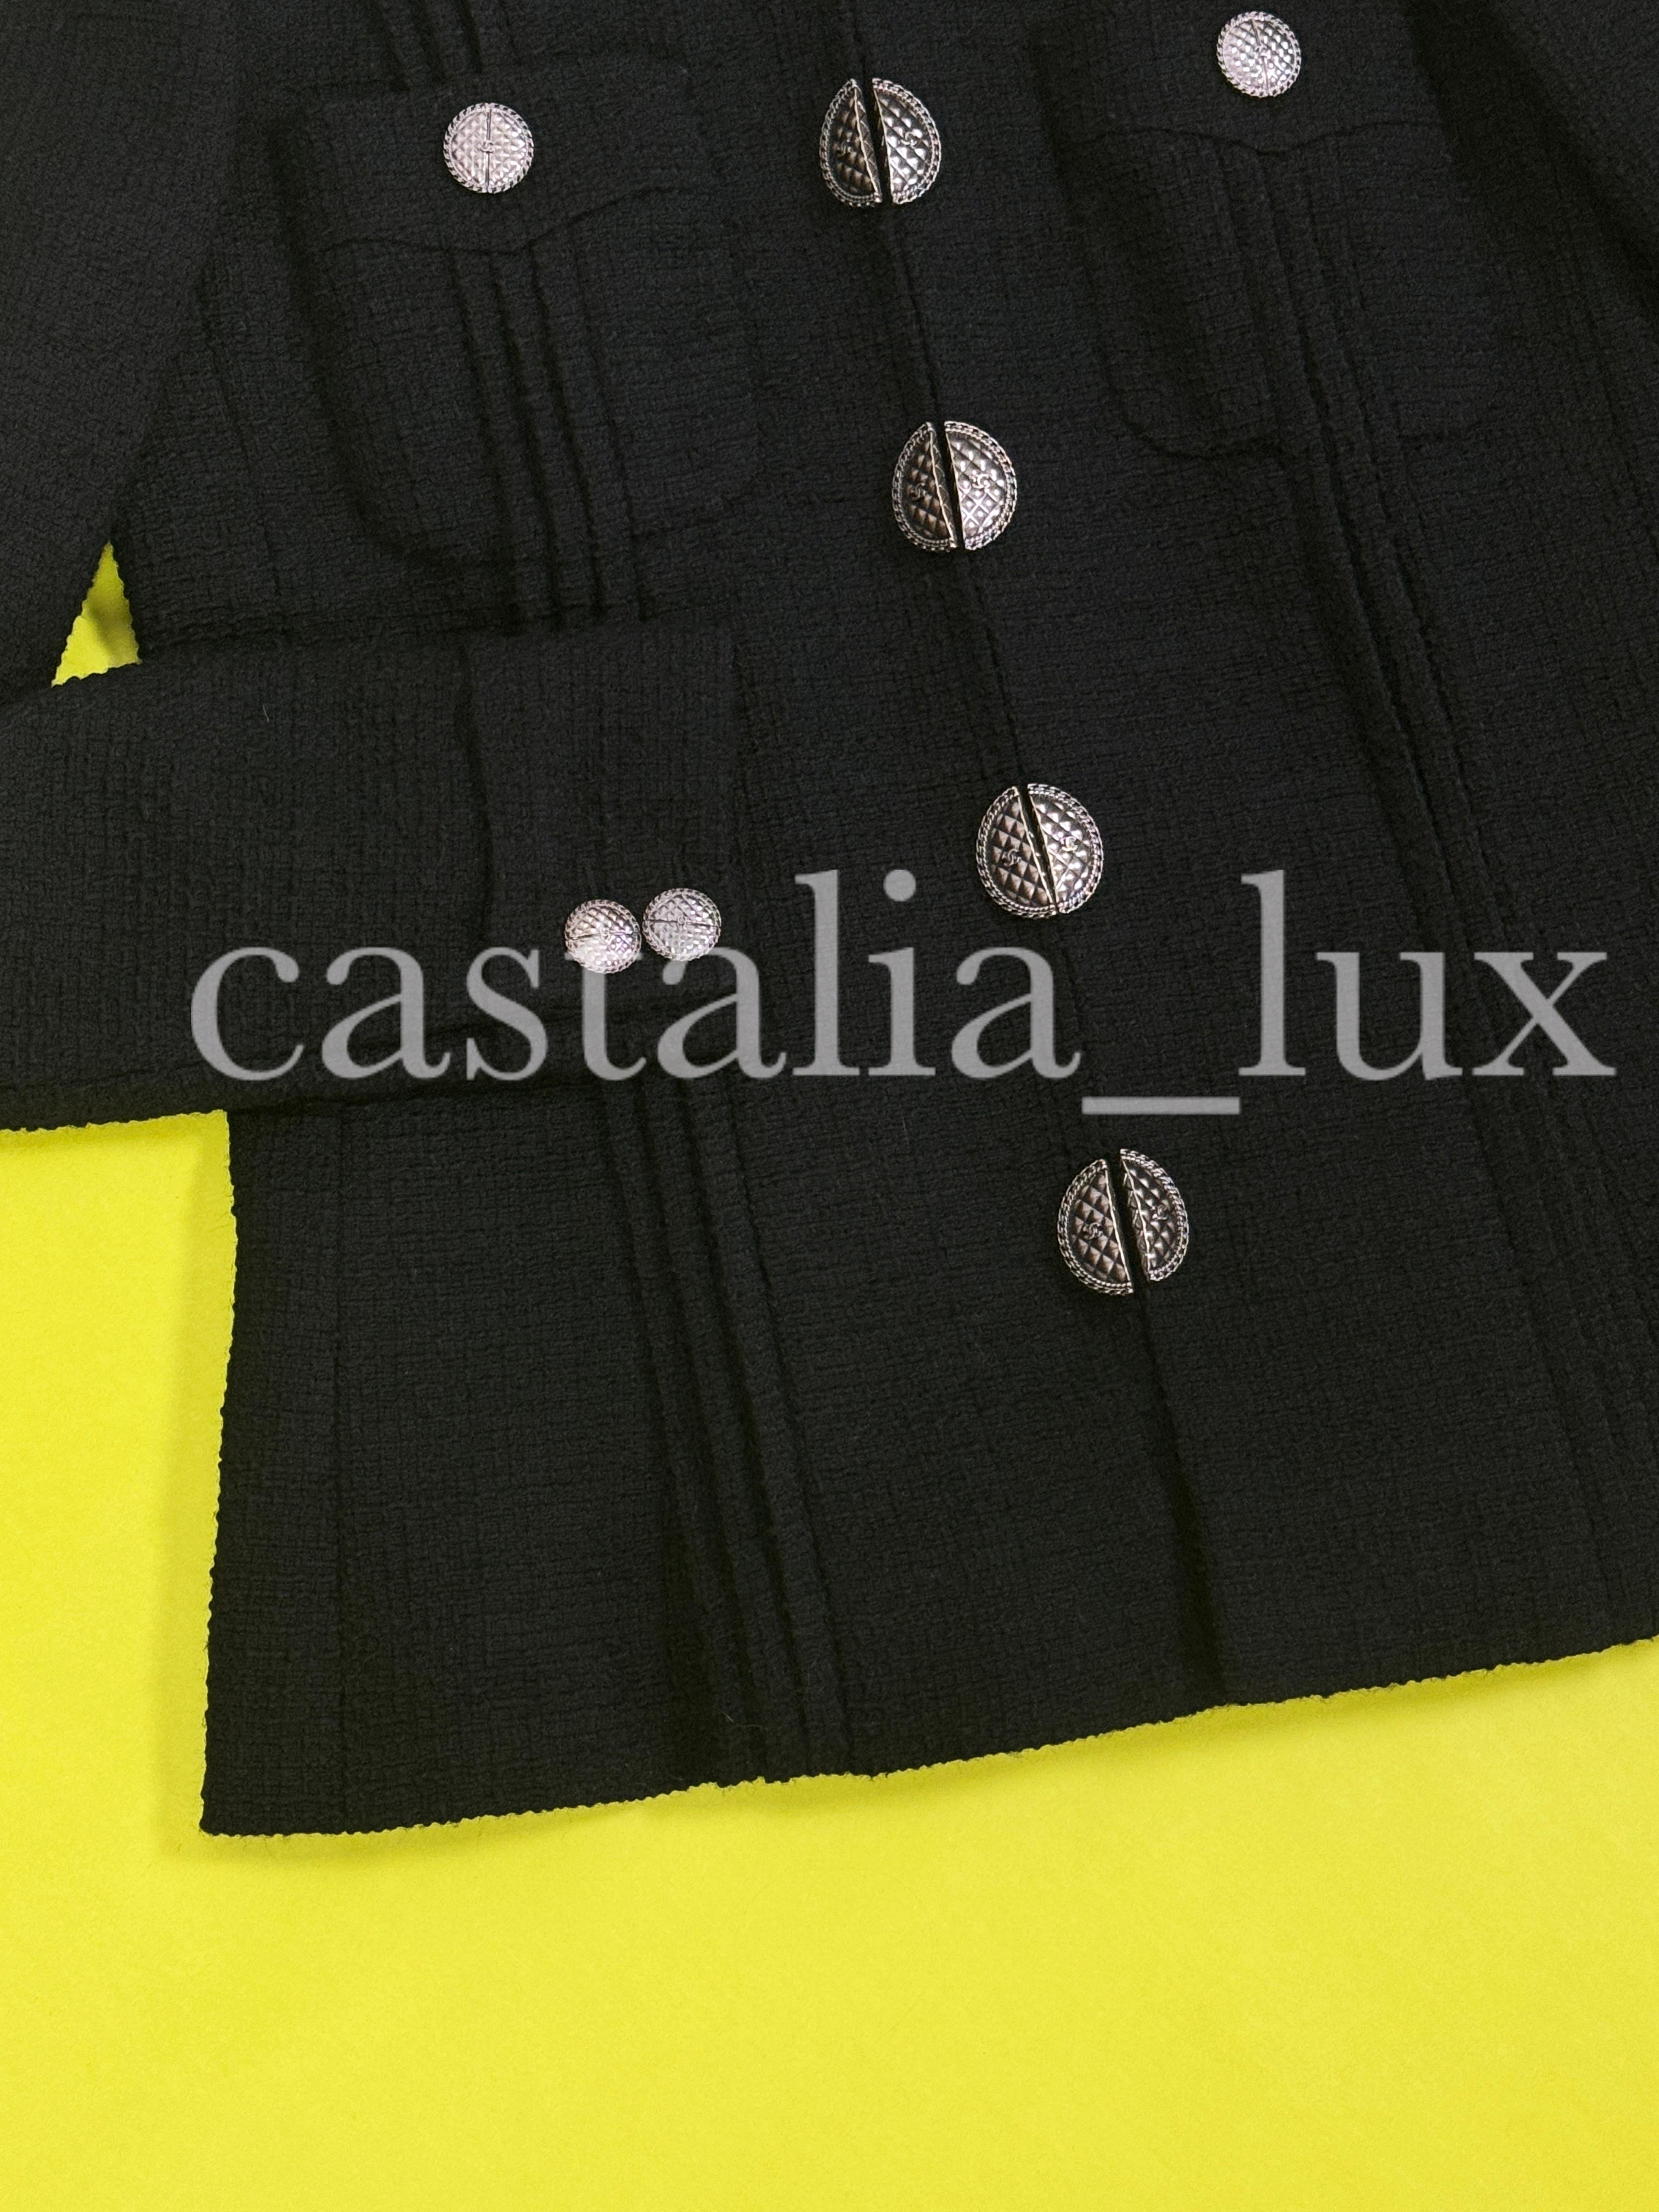 Chanel New Paris / Cuba Black Tweed Jacket  For Sale 6